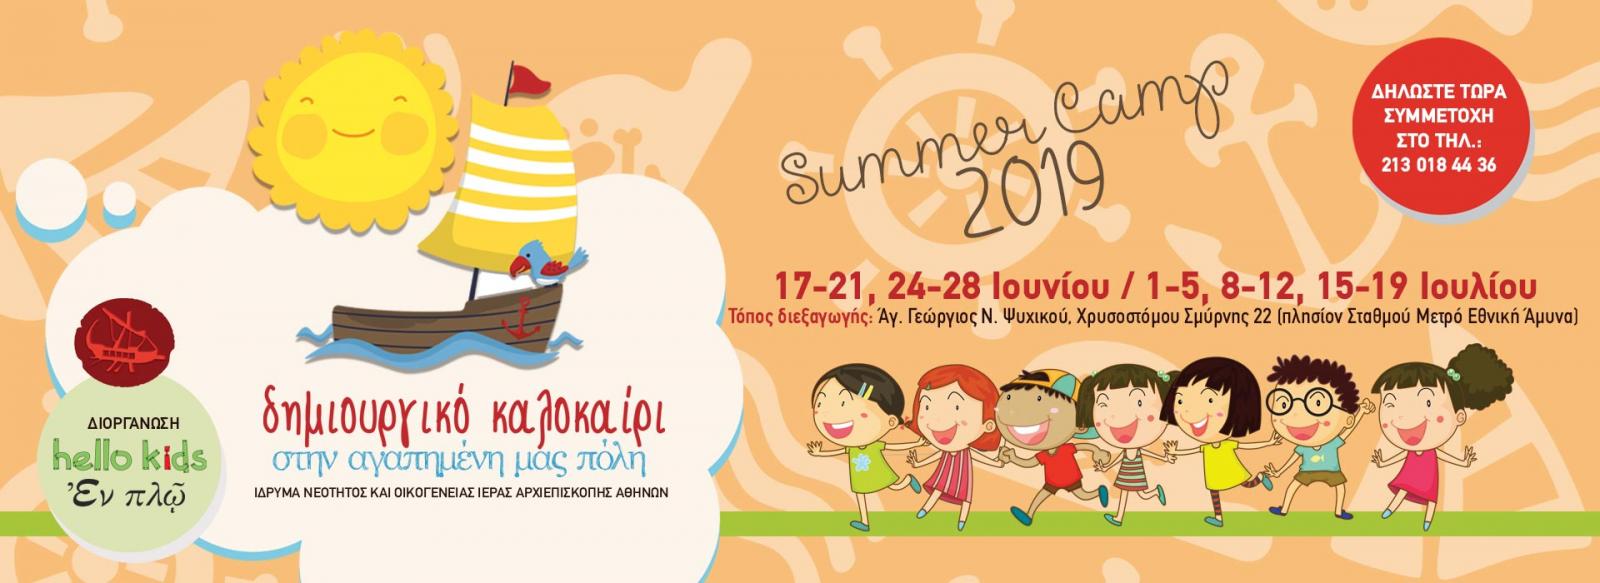 Summer Camp για παιδιά 4-12 ετών στον Άγ. Γεώργιο Ν. Ψυχικού